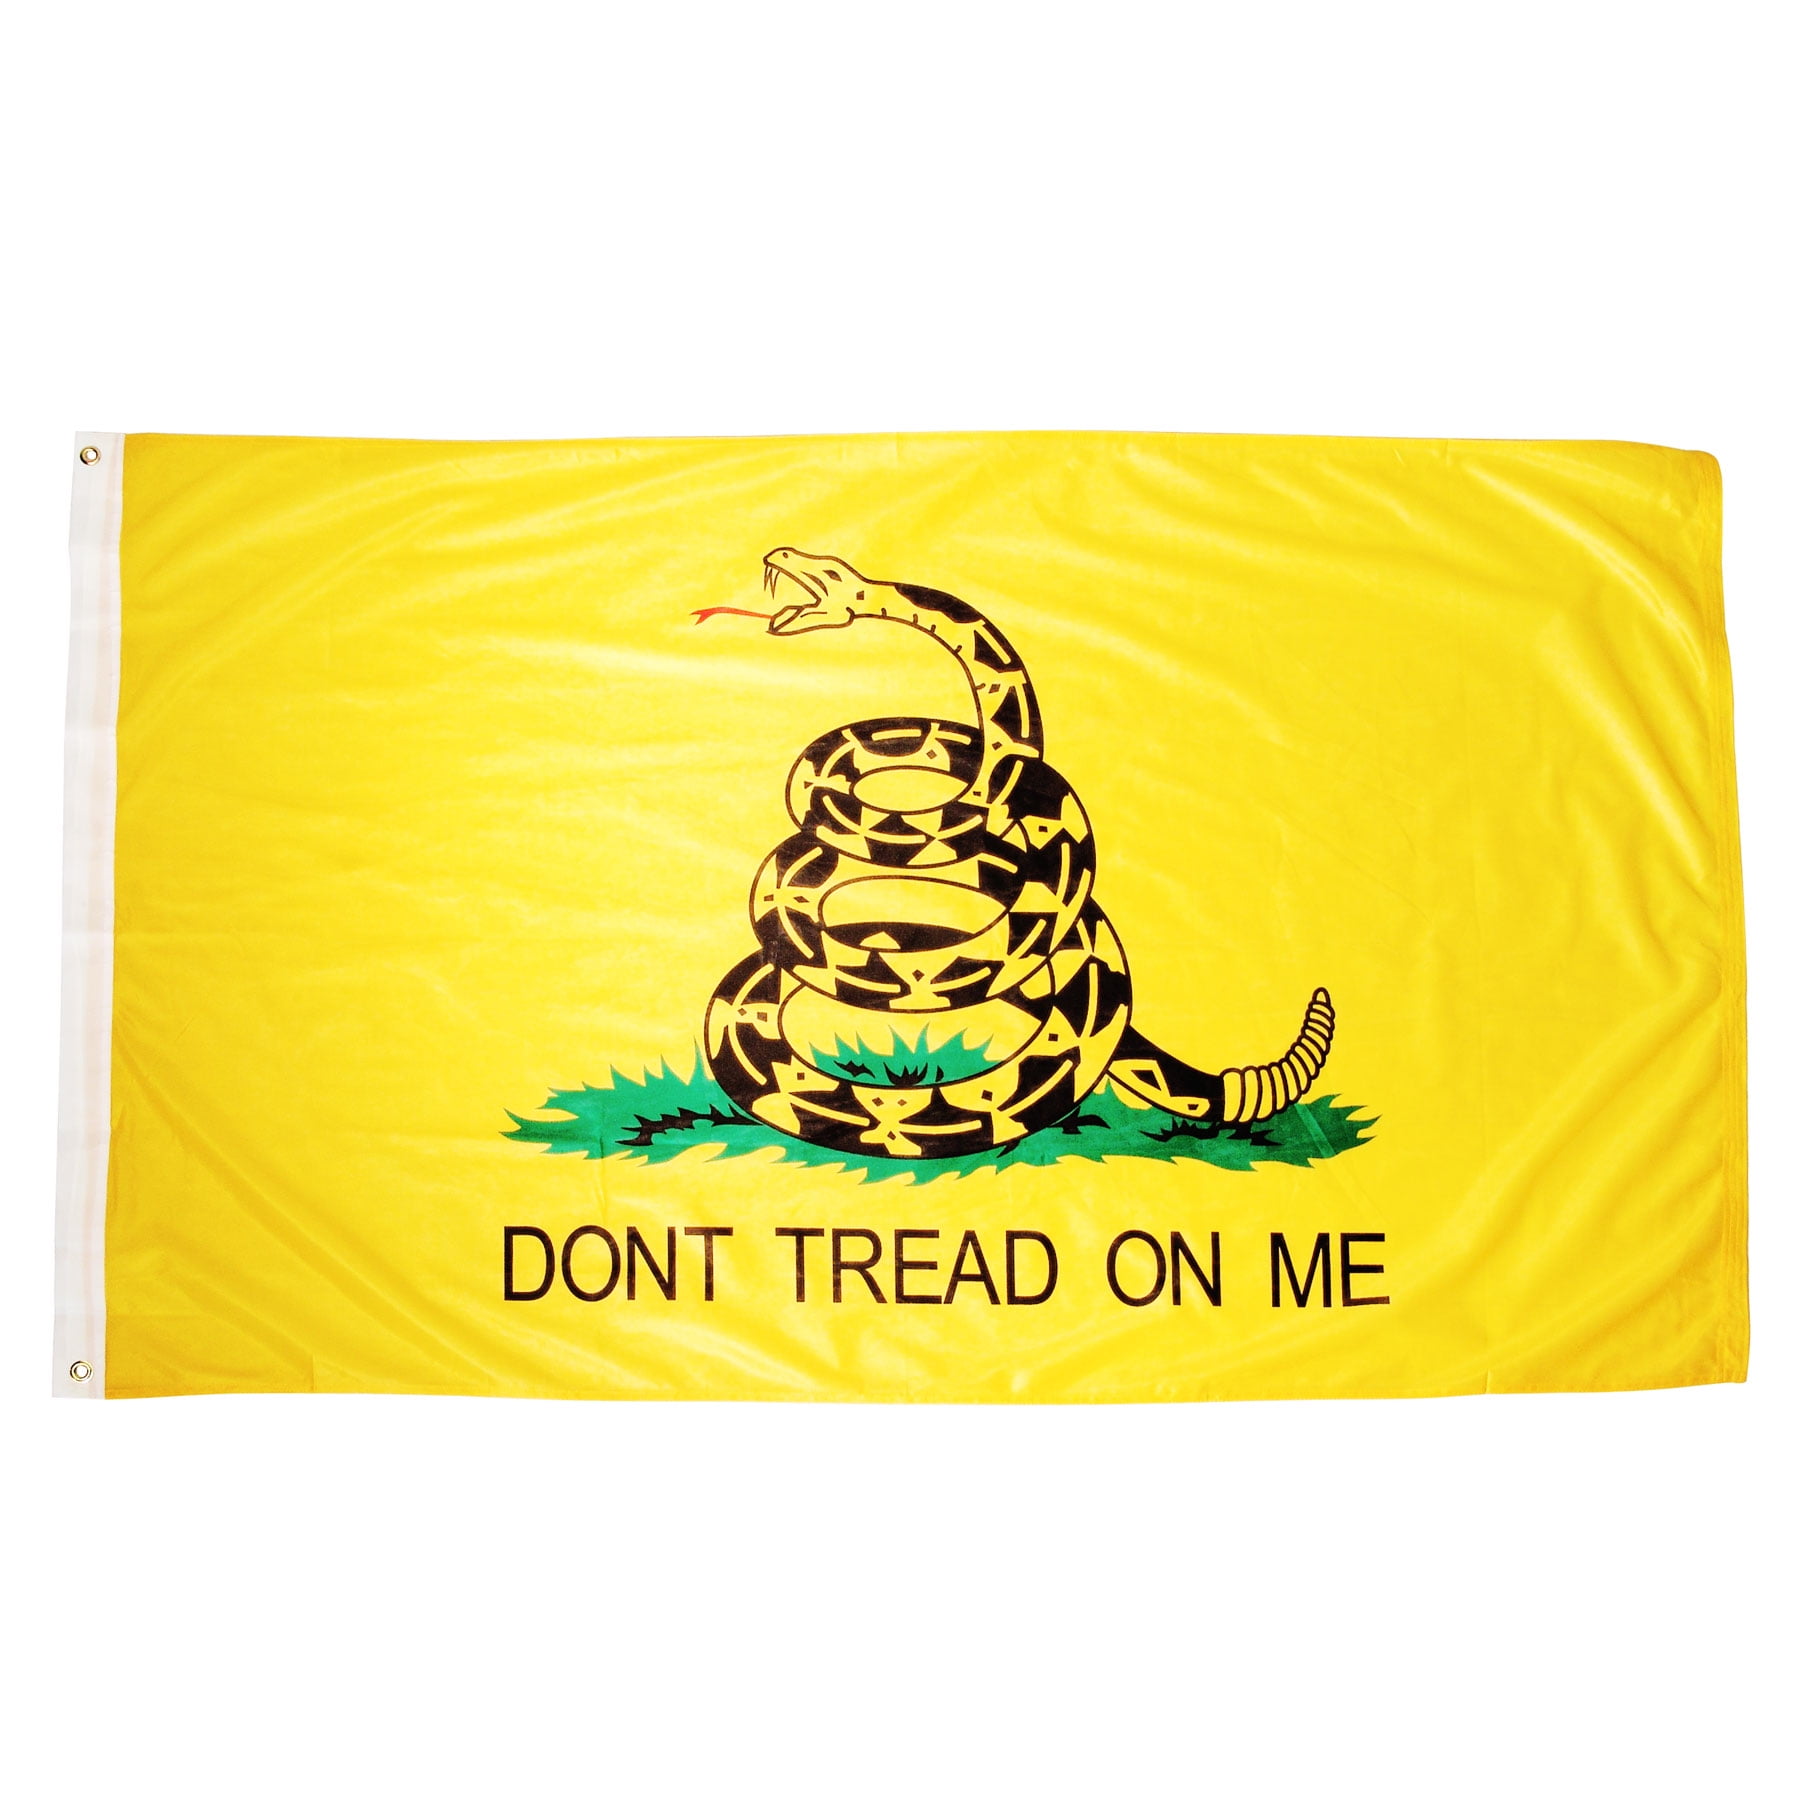 Dont Tread On Me Flag 3x5 Ft Yellow Tea Party Rattlesnake Gadsden Don’t Tread 